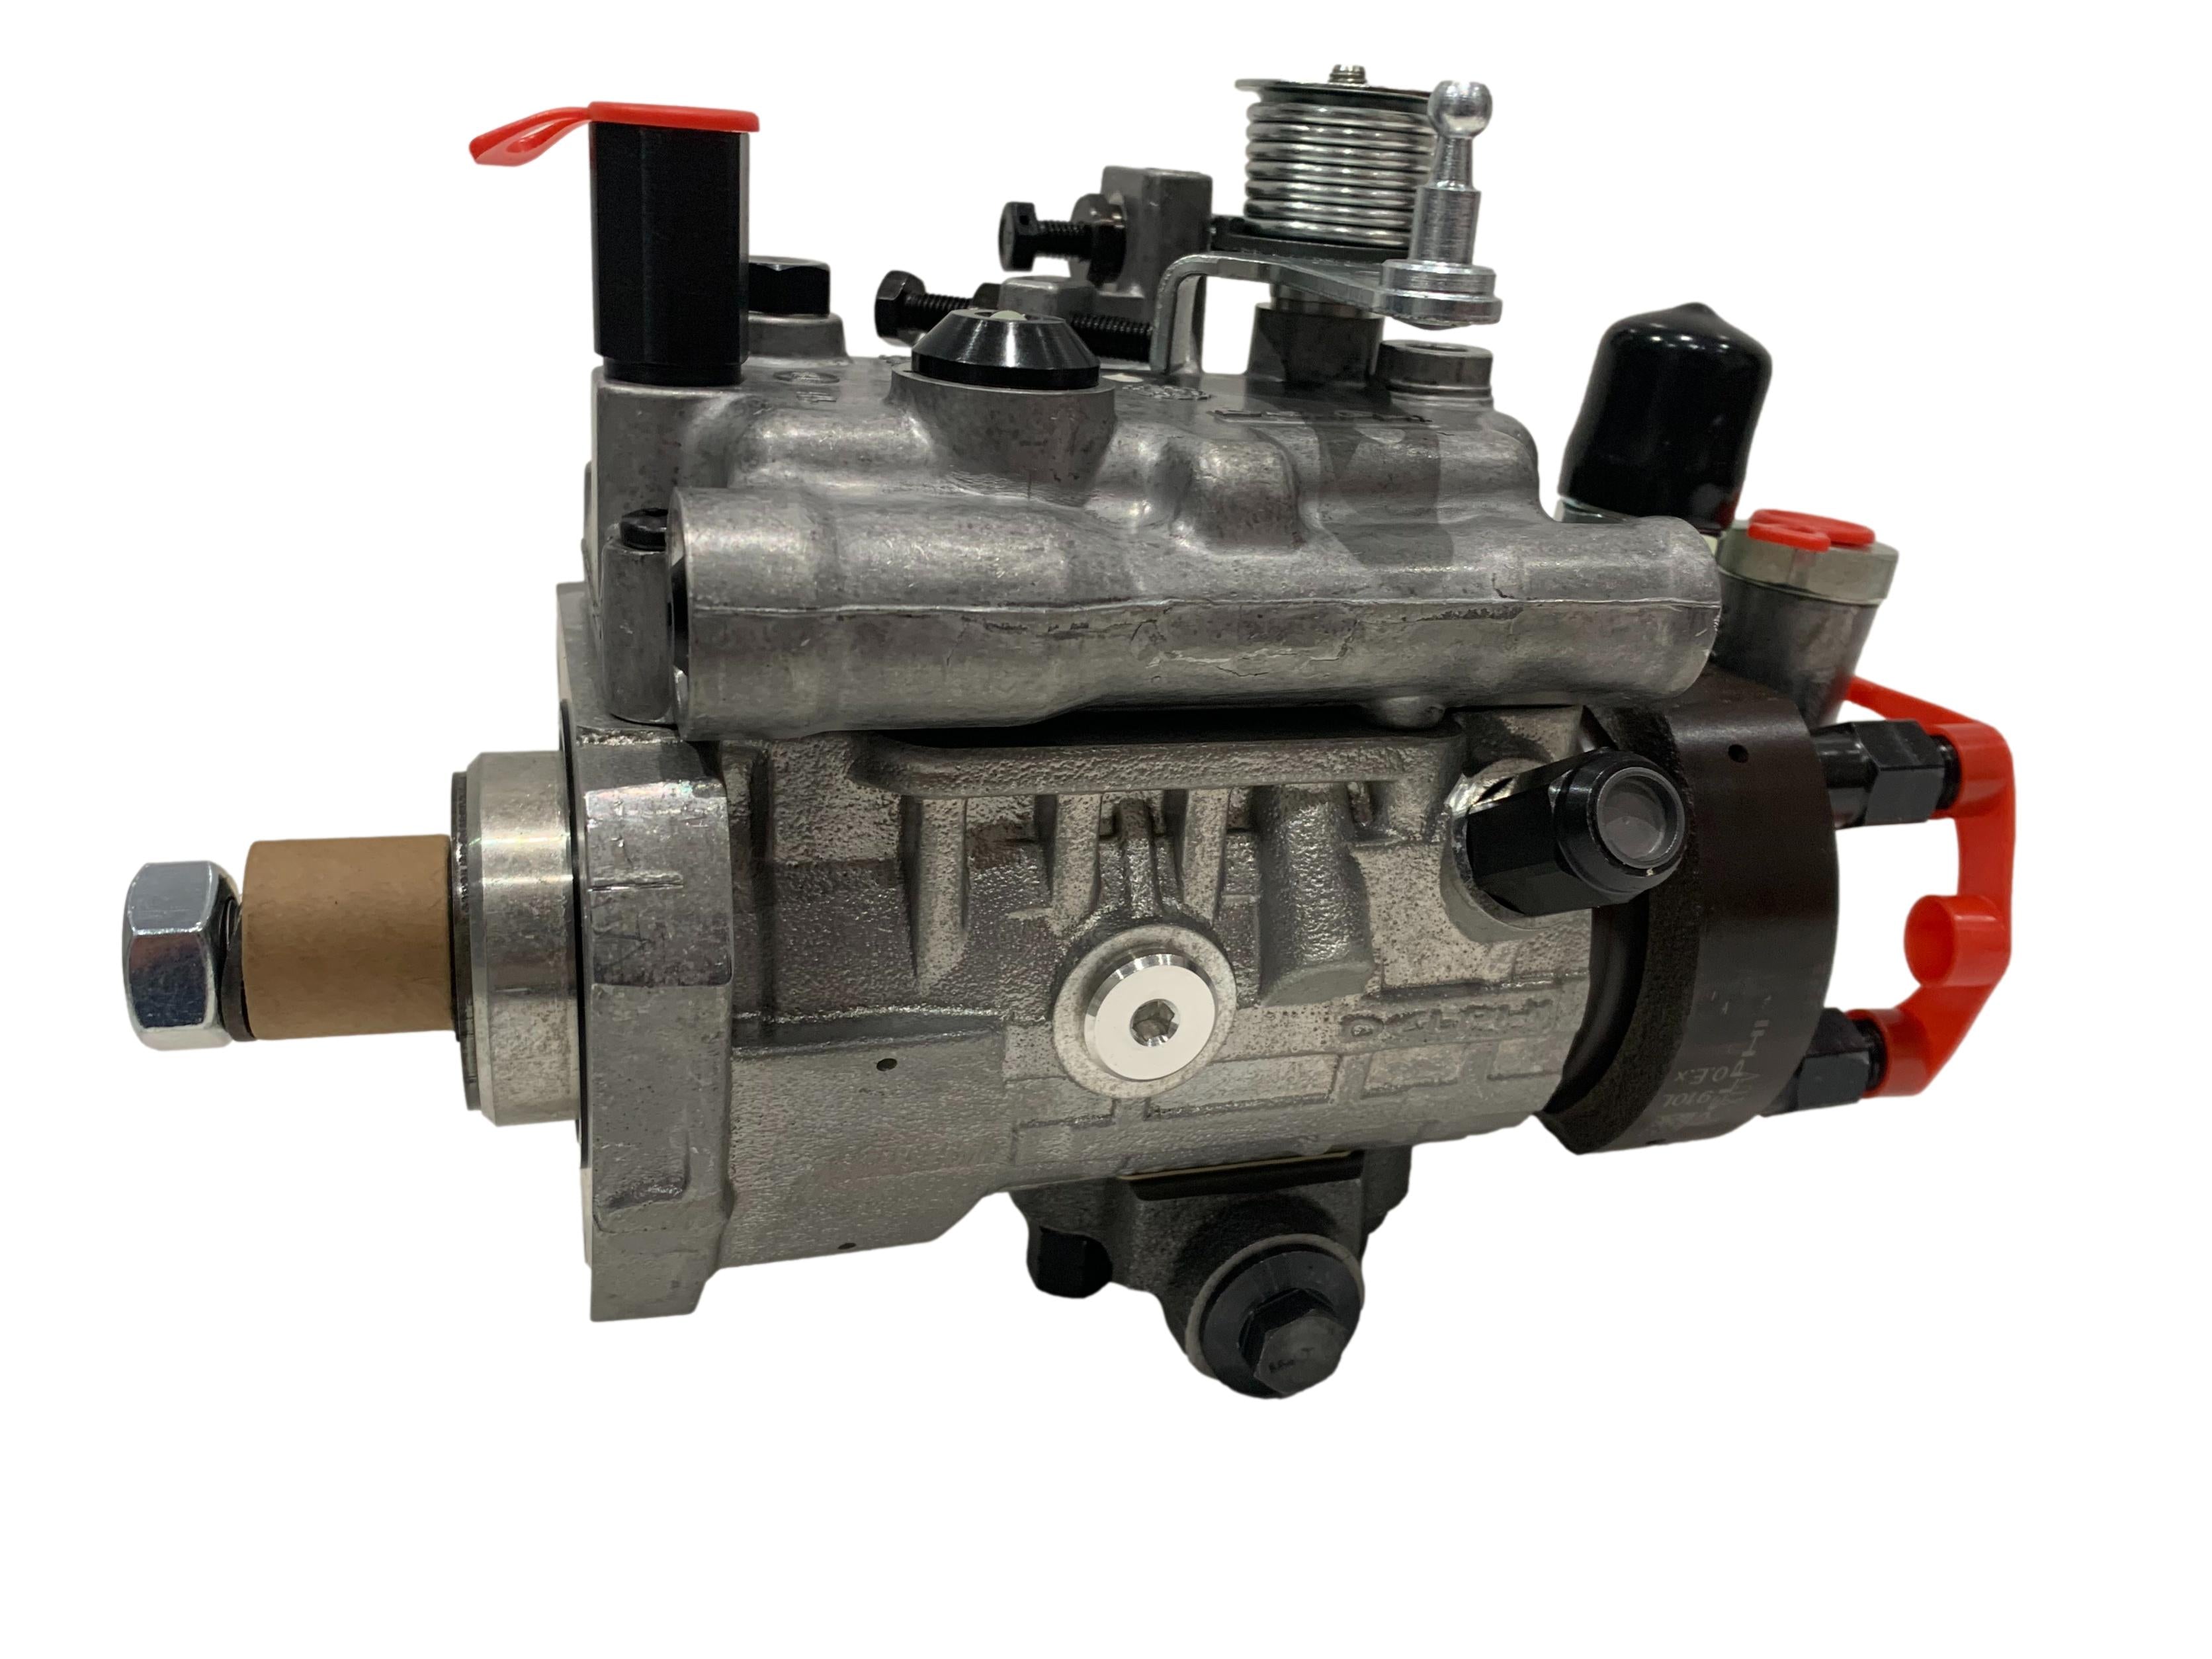 8920A719W 87801252 Delphi Diesel Fuel Injection Pump Fits a 655E New Holland